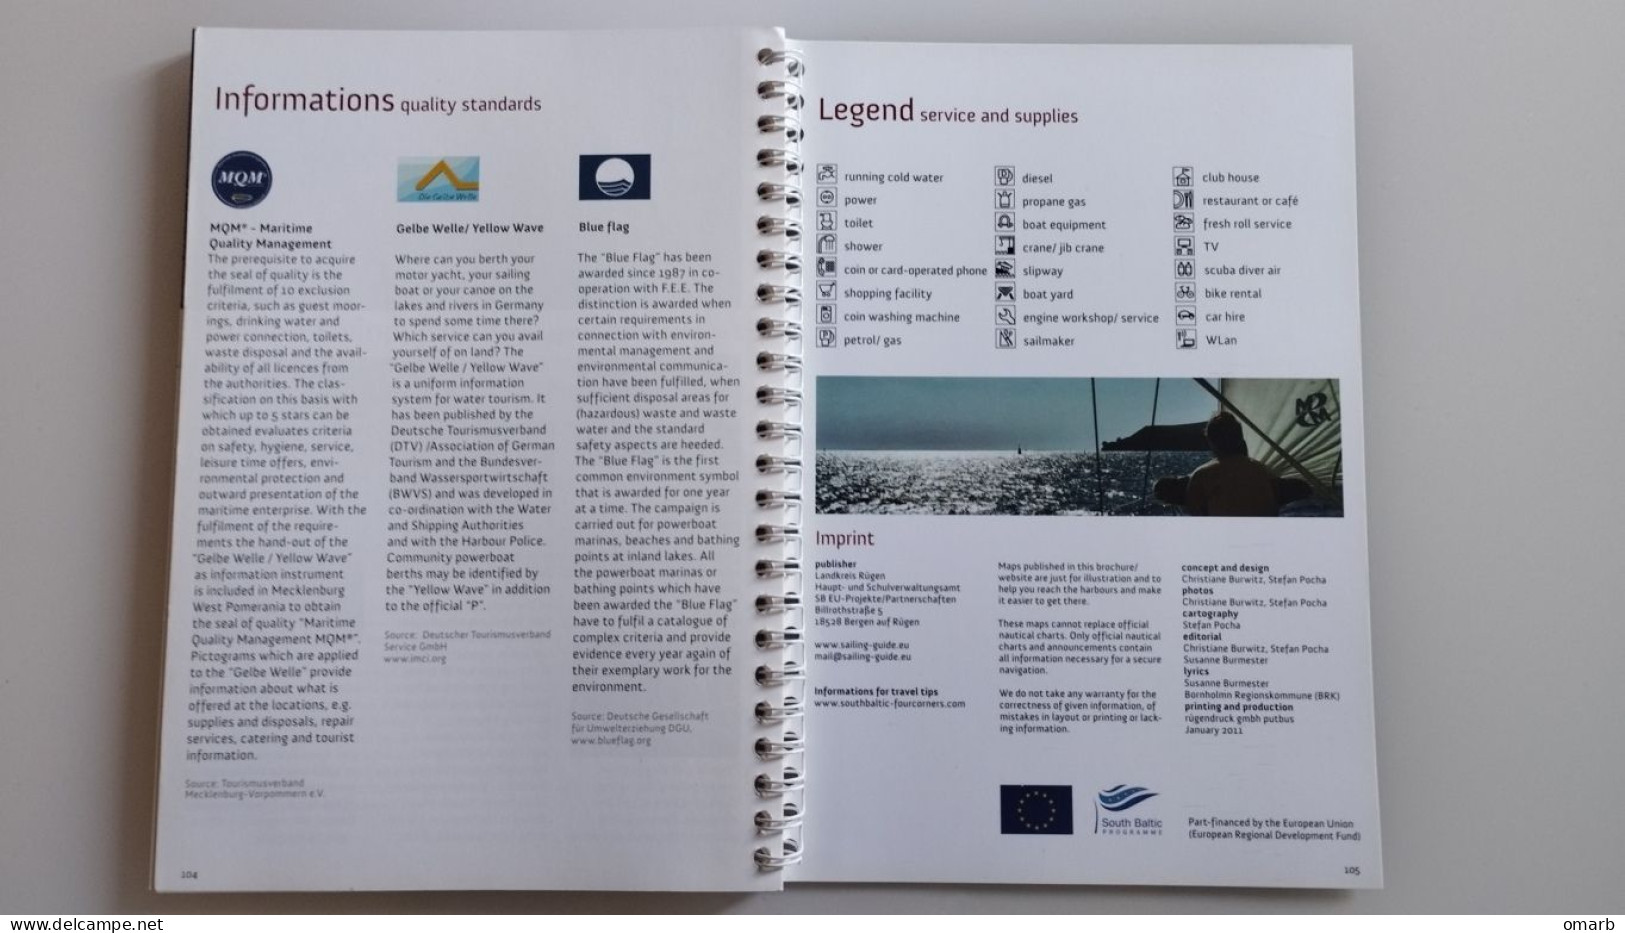 Lib489 Sailing Guide Travel Tips South Baltic Sea Guida Barca A Vela Approdi Porto Harbour Mar Baltico Rugen Stralsund - Technics & Instruments